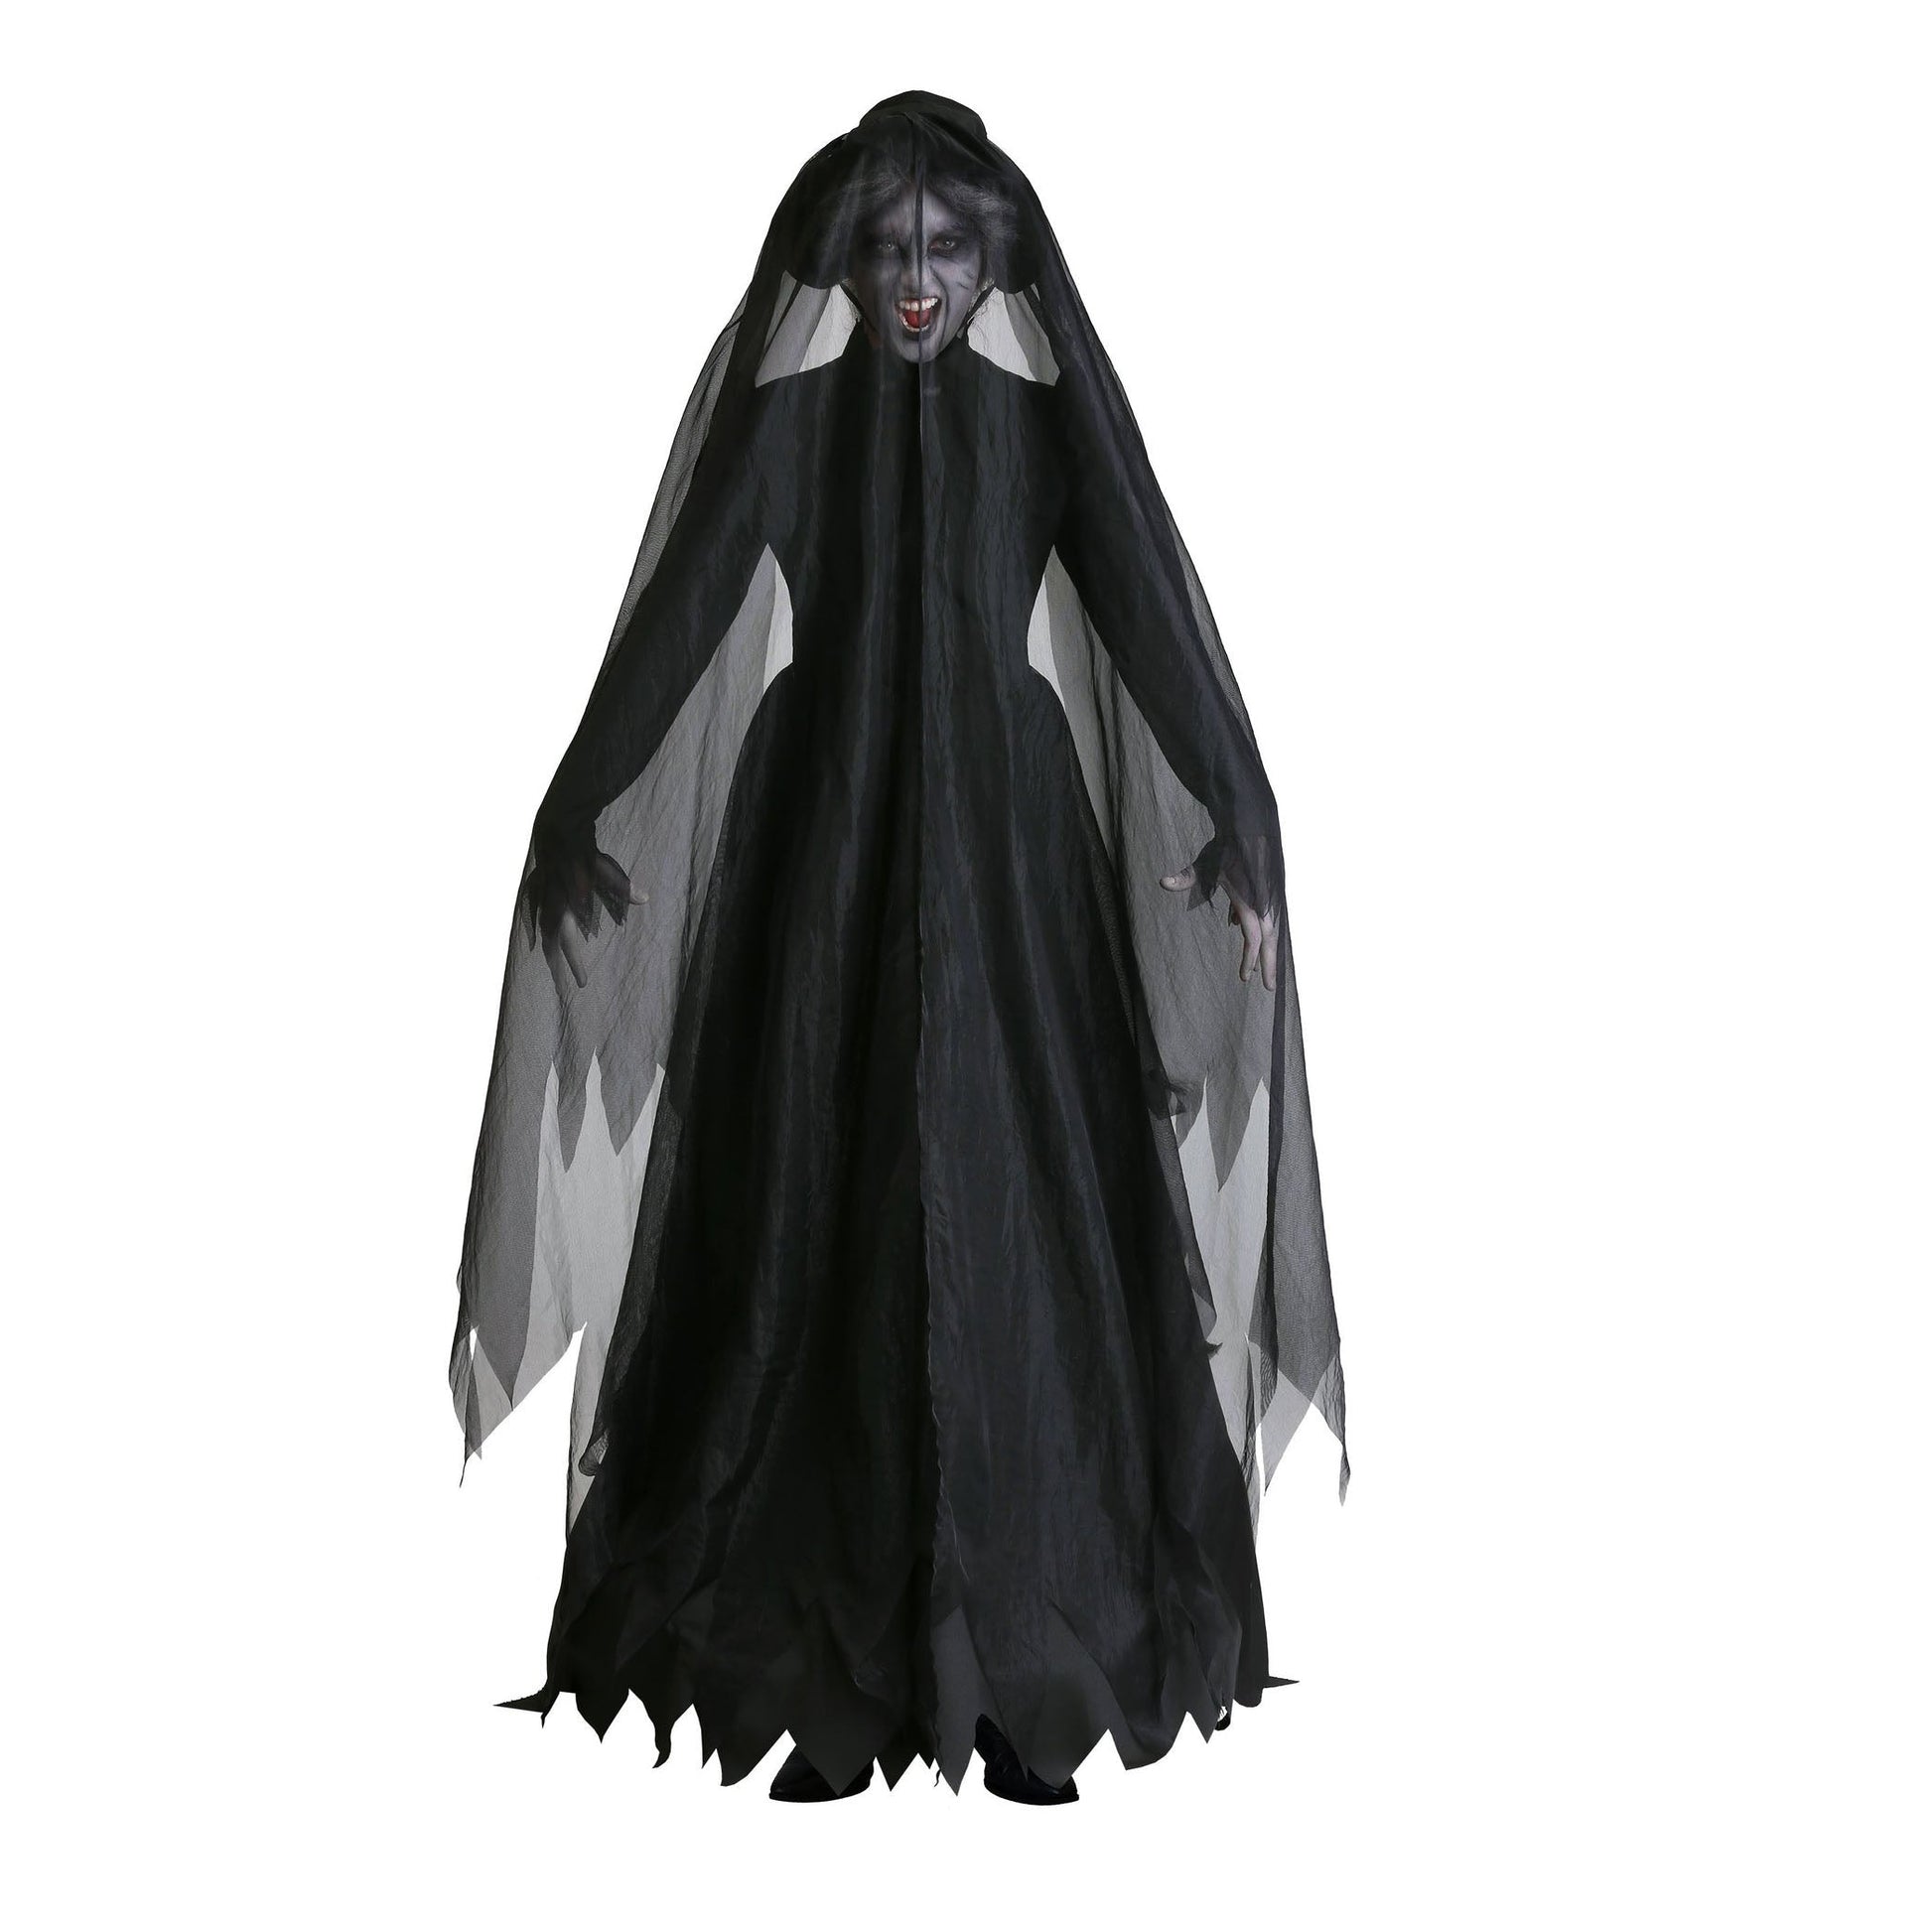 Adult Women's Black Dark Witch Costume Ghost Bride Halloween Cosplay Costume Dress